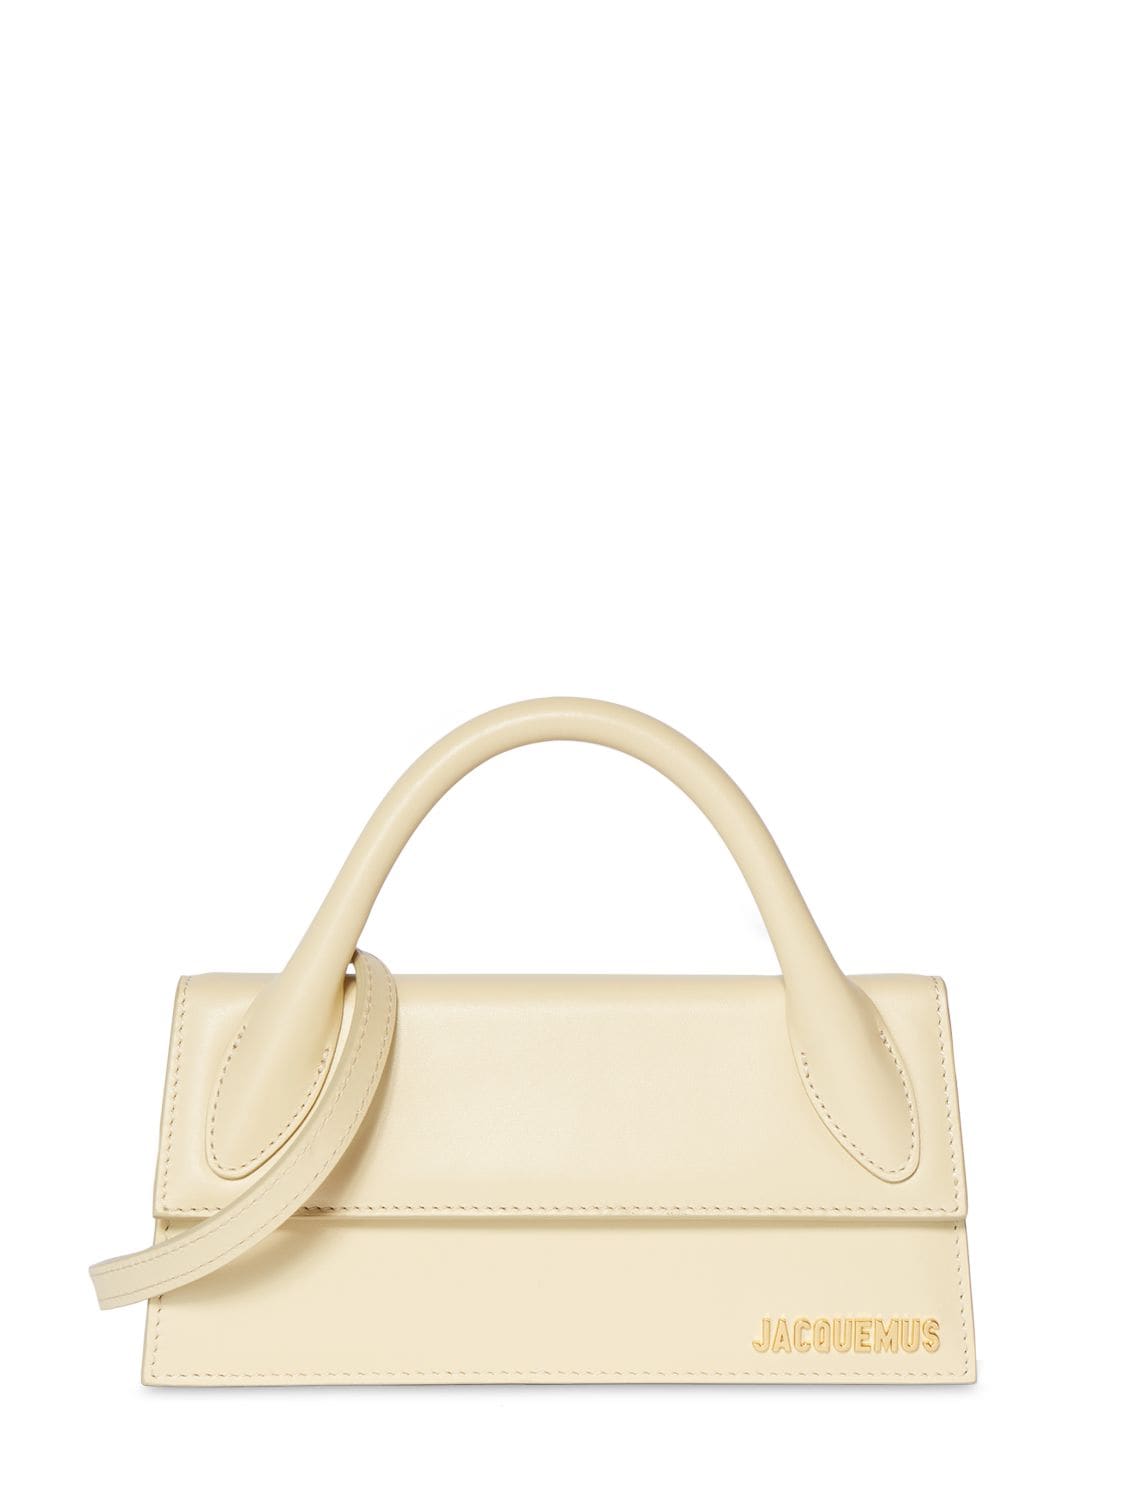 Le Chiquito Long Bag - Jacquemus - White - Leather